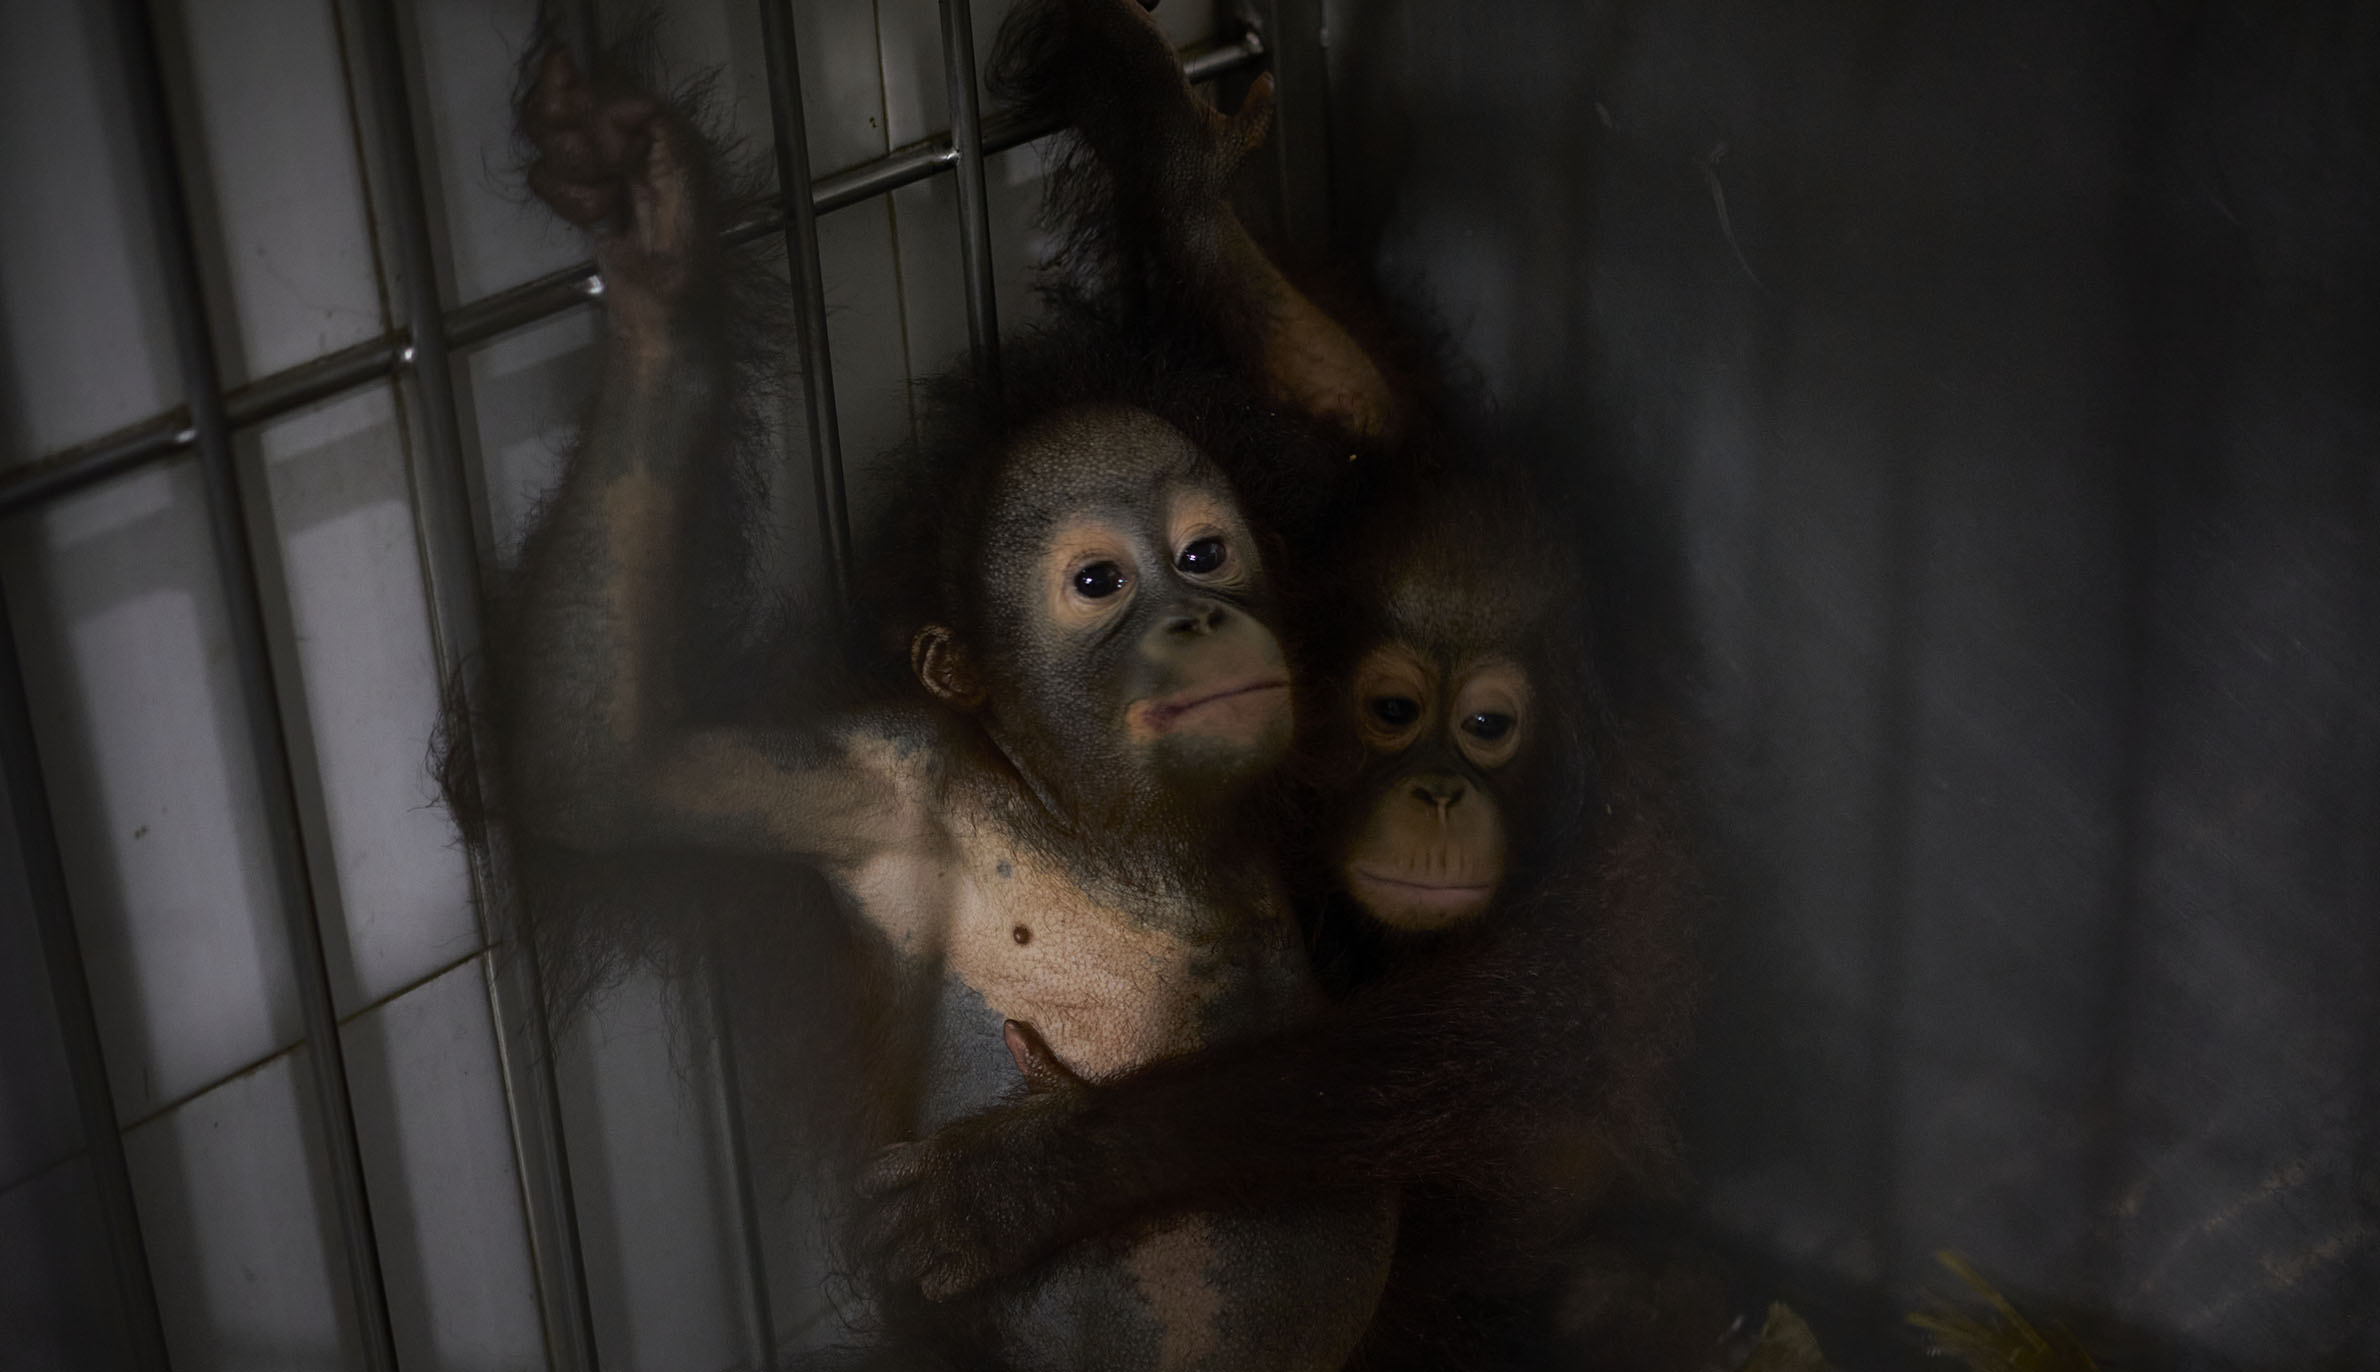 A photograph of orphaned orangutans kept in a facility taken on Borneo Island.